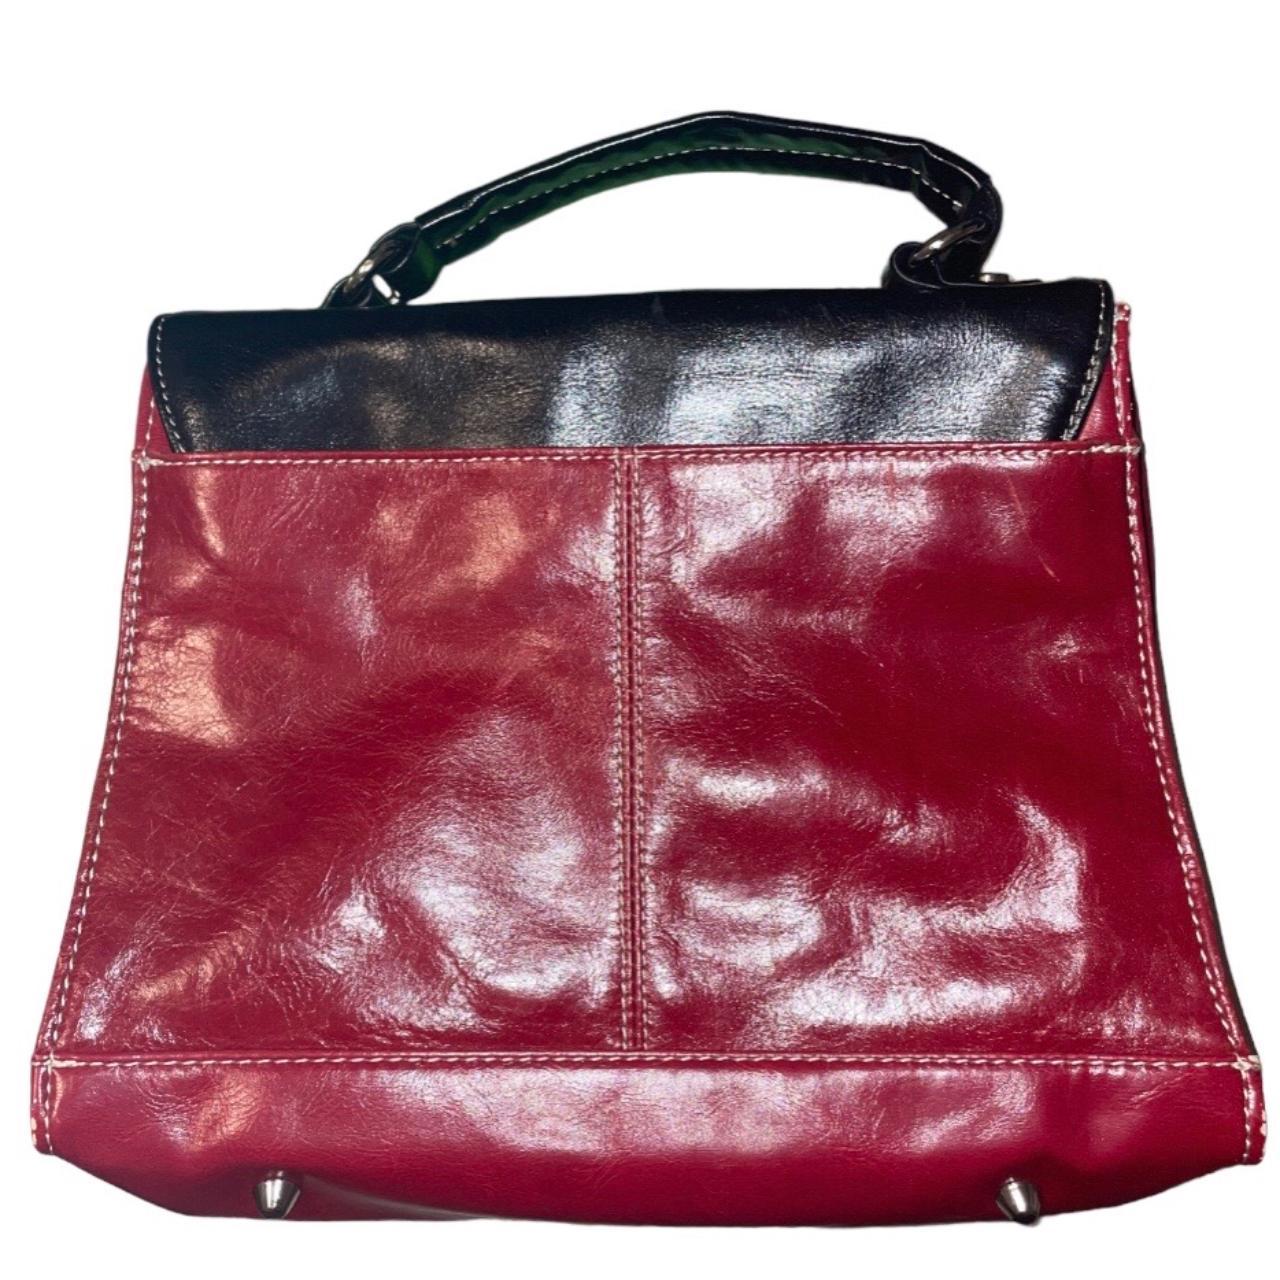 Giani Bernini Red Leather Purse